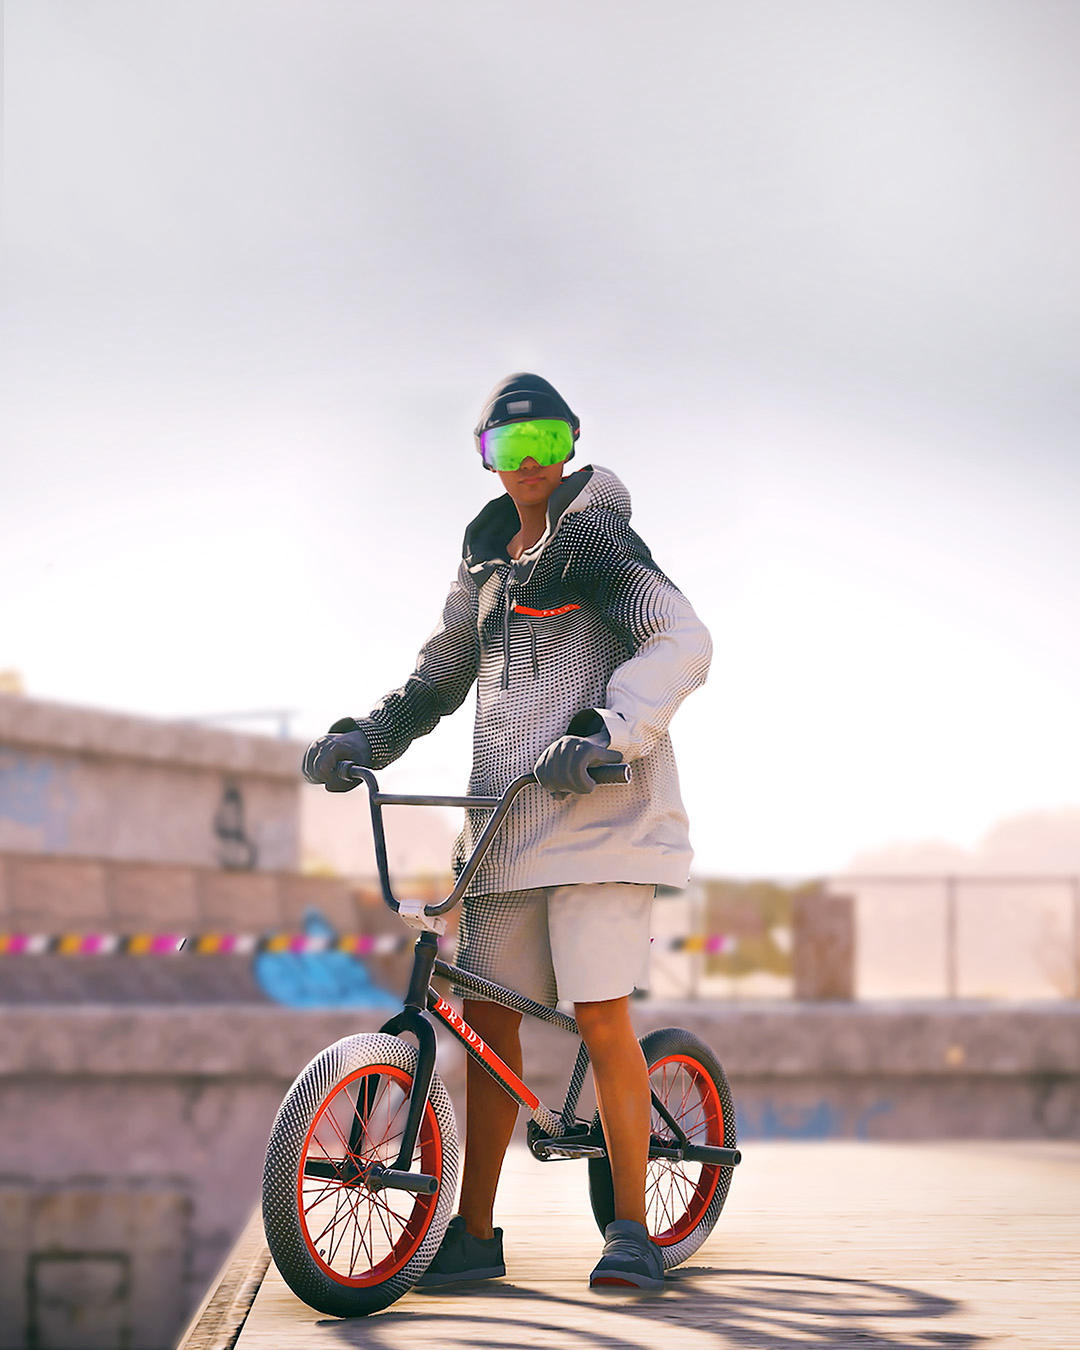 Prada - Get a new look of the new #Prada Linea Rossa Optical BMX gear, now in #RidersRepublicGame